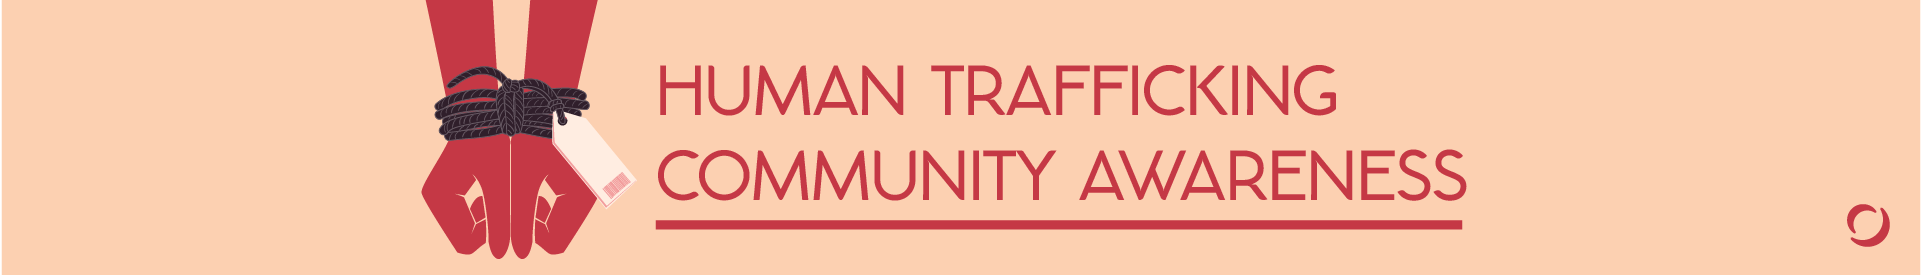 Human Trafficking Community Awareness Banner